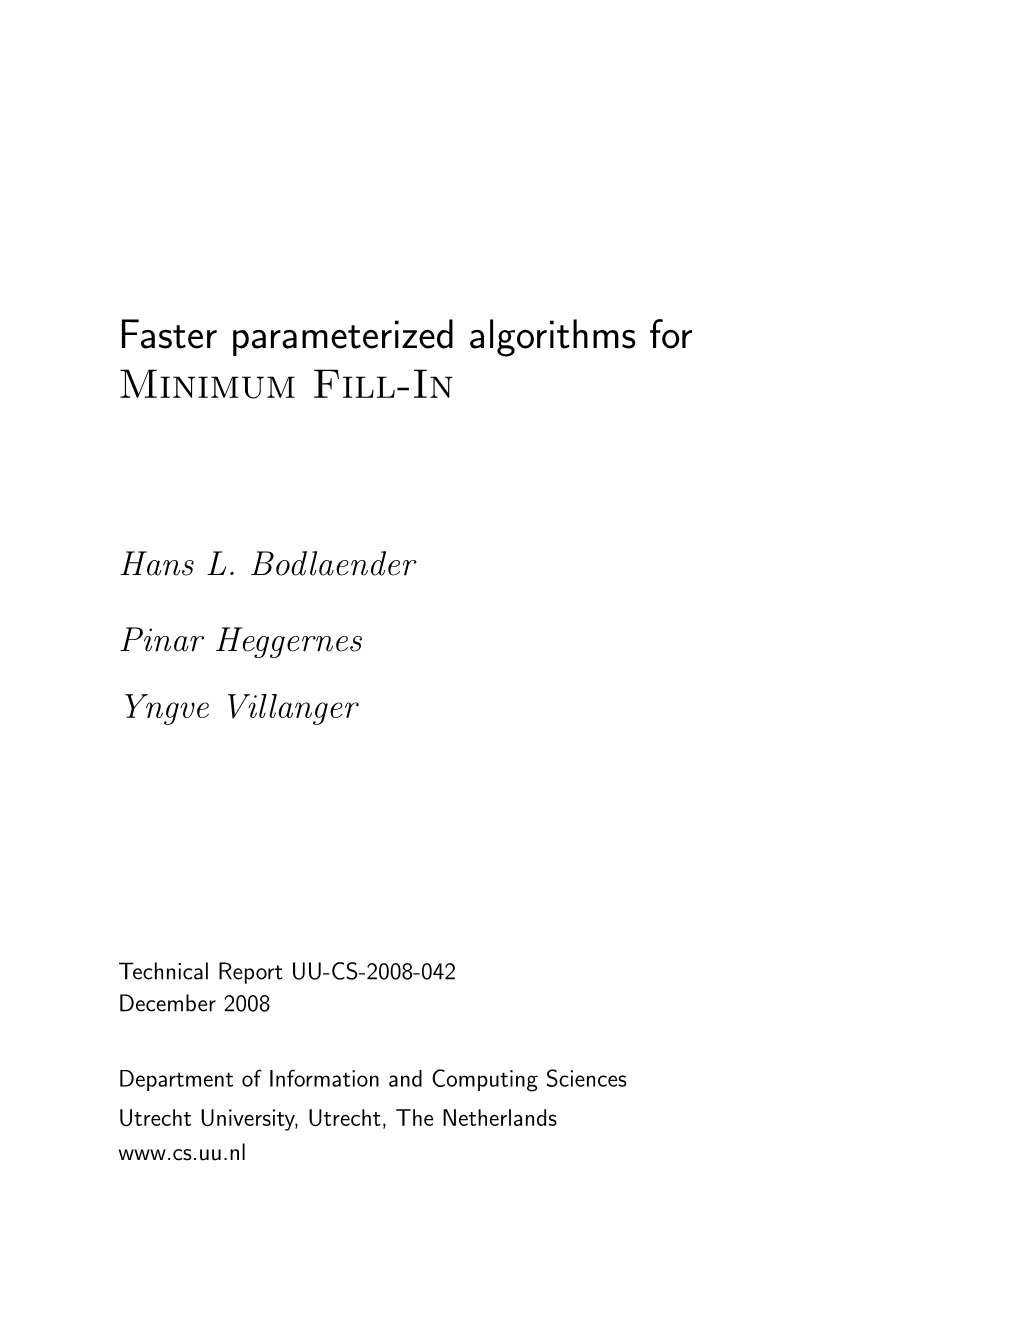 Faster Parameterized Algorithms for Minimum Fill-In